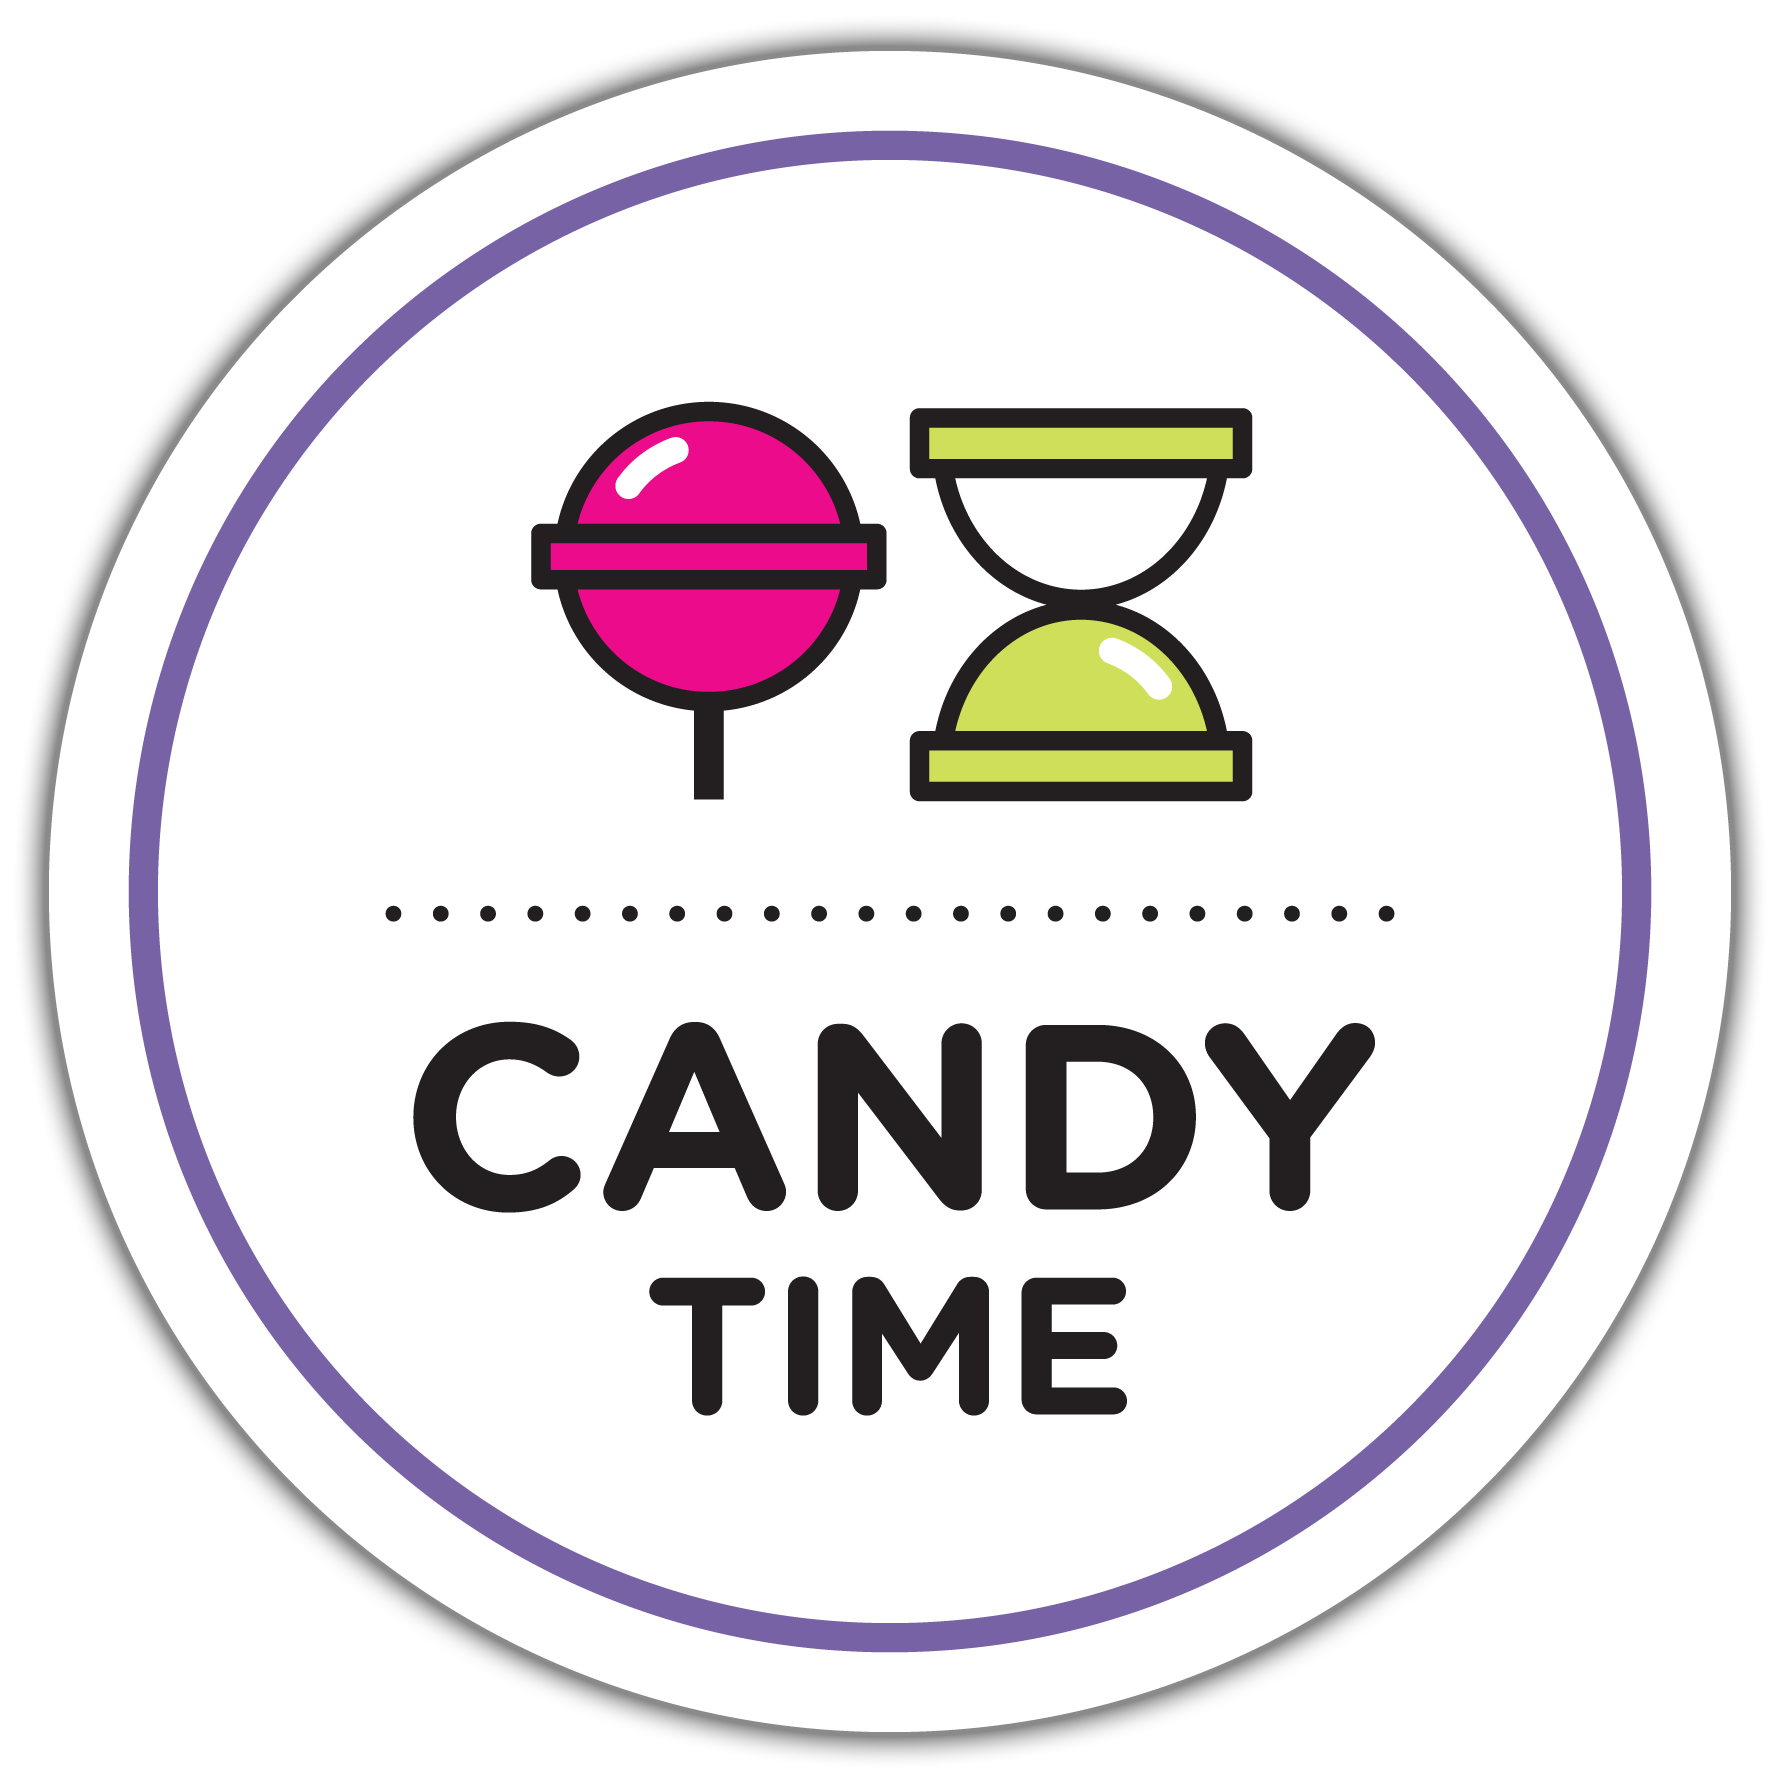 Pop Tarts Australia - Candy Time